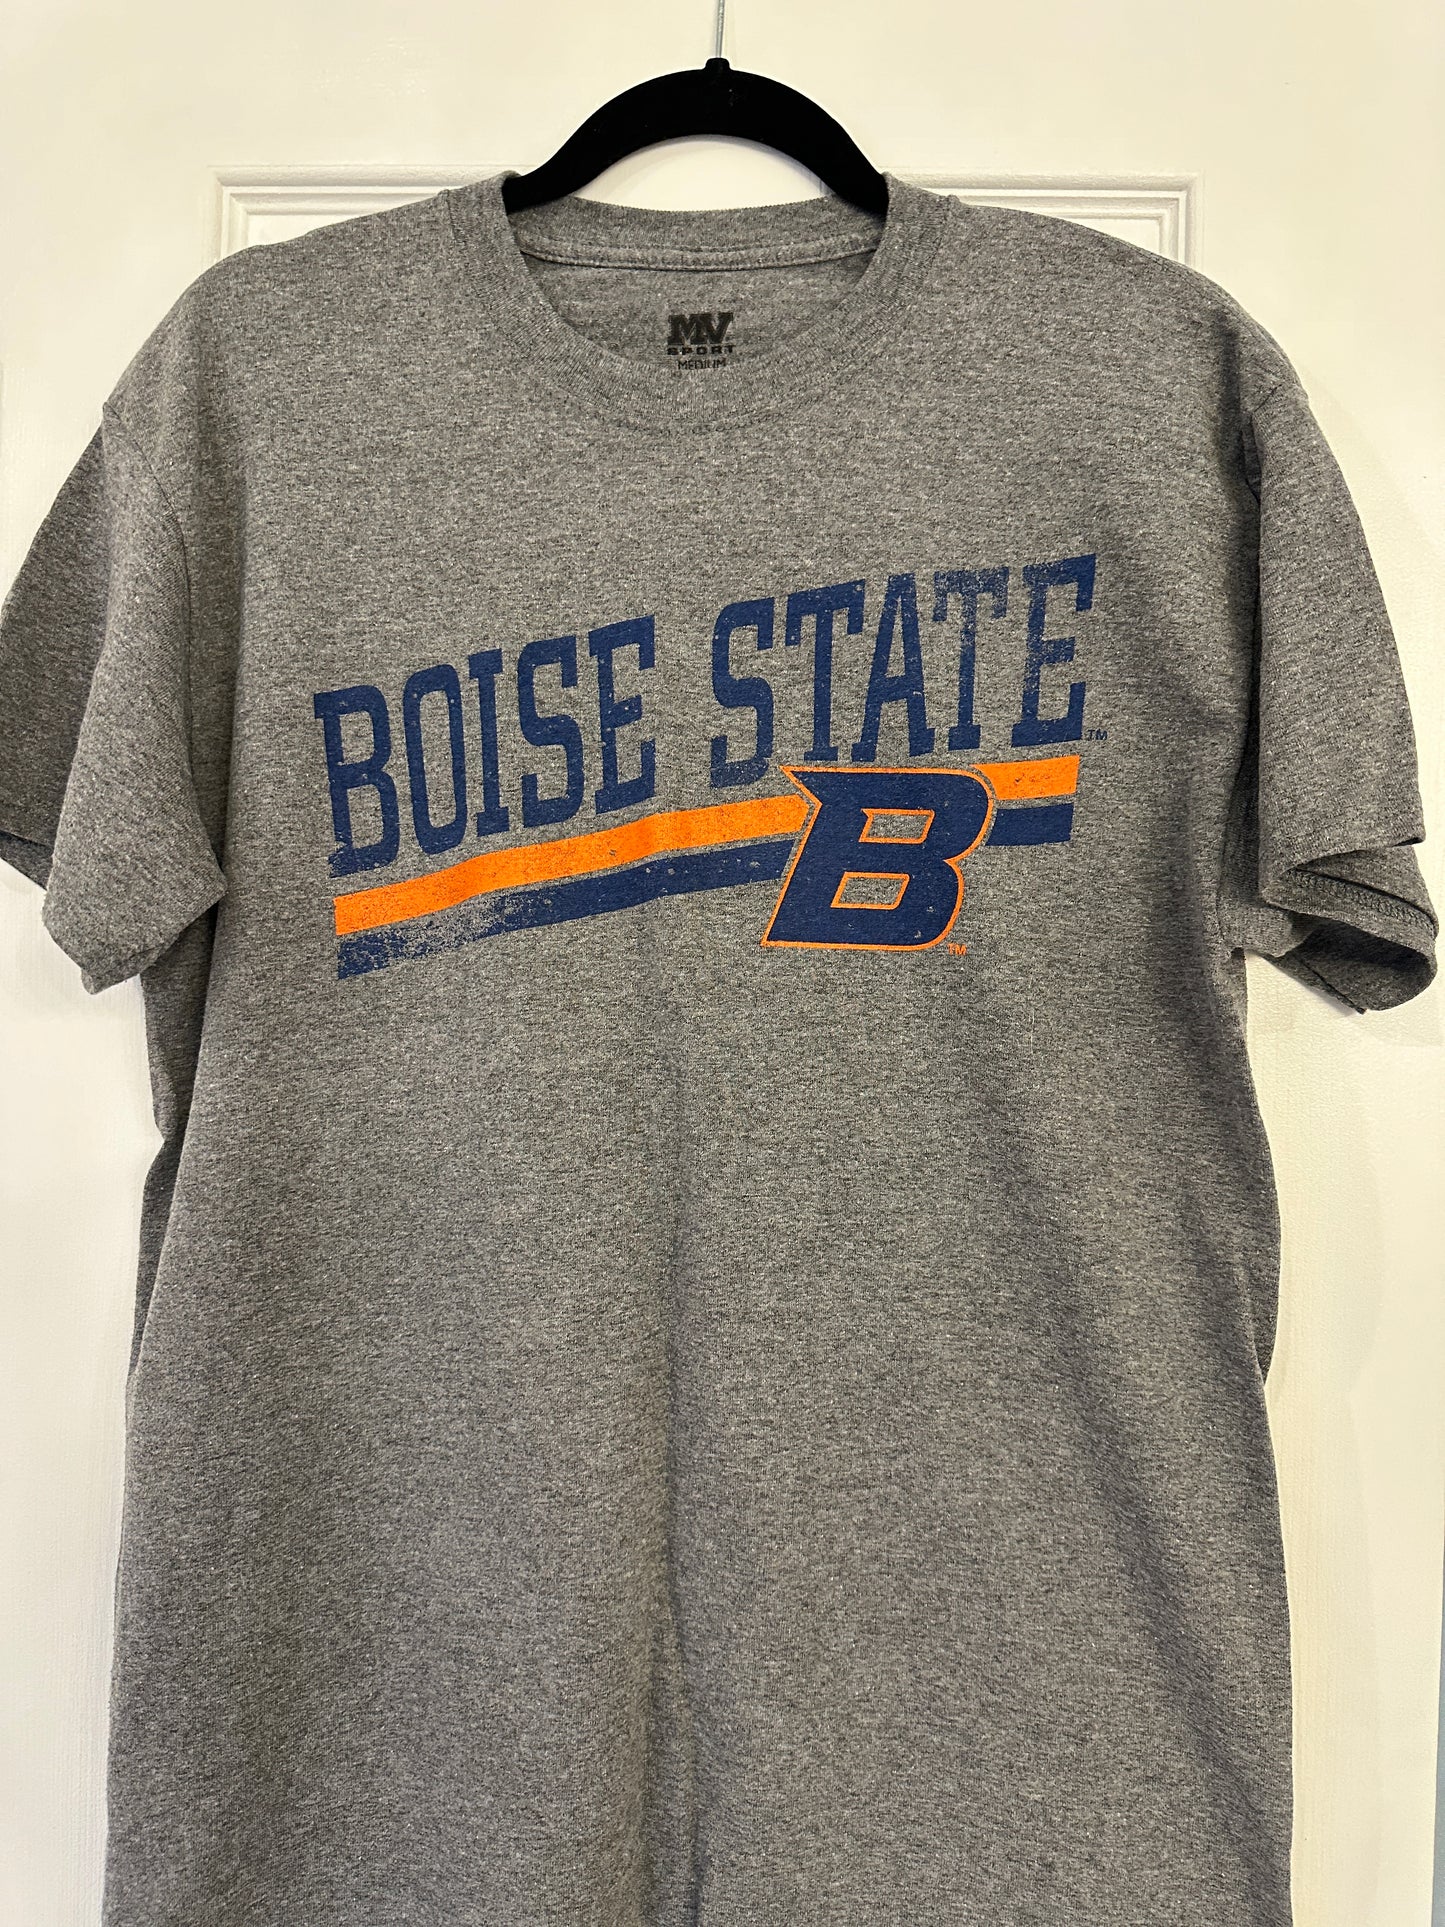 Boise State Bundle - 2 Shirts